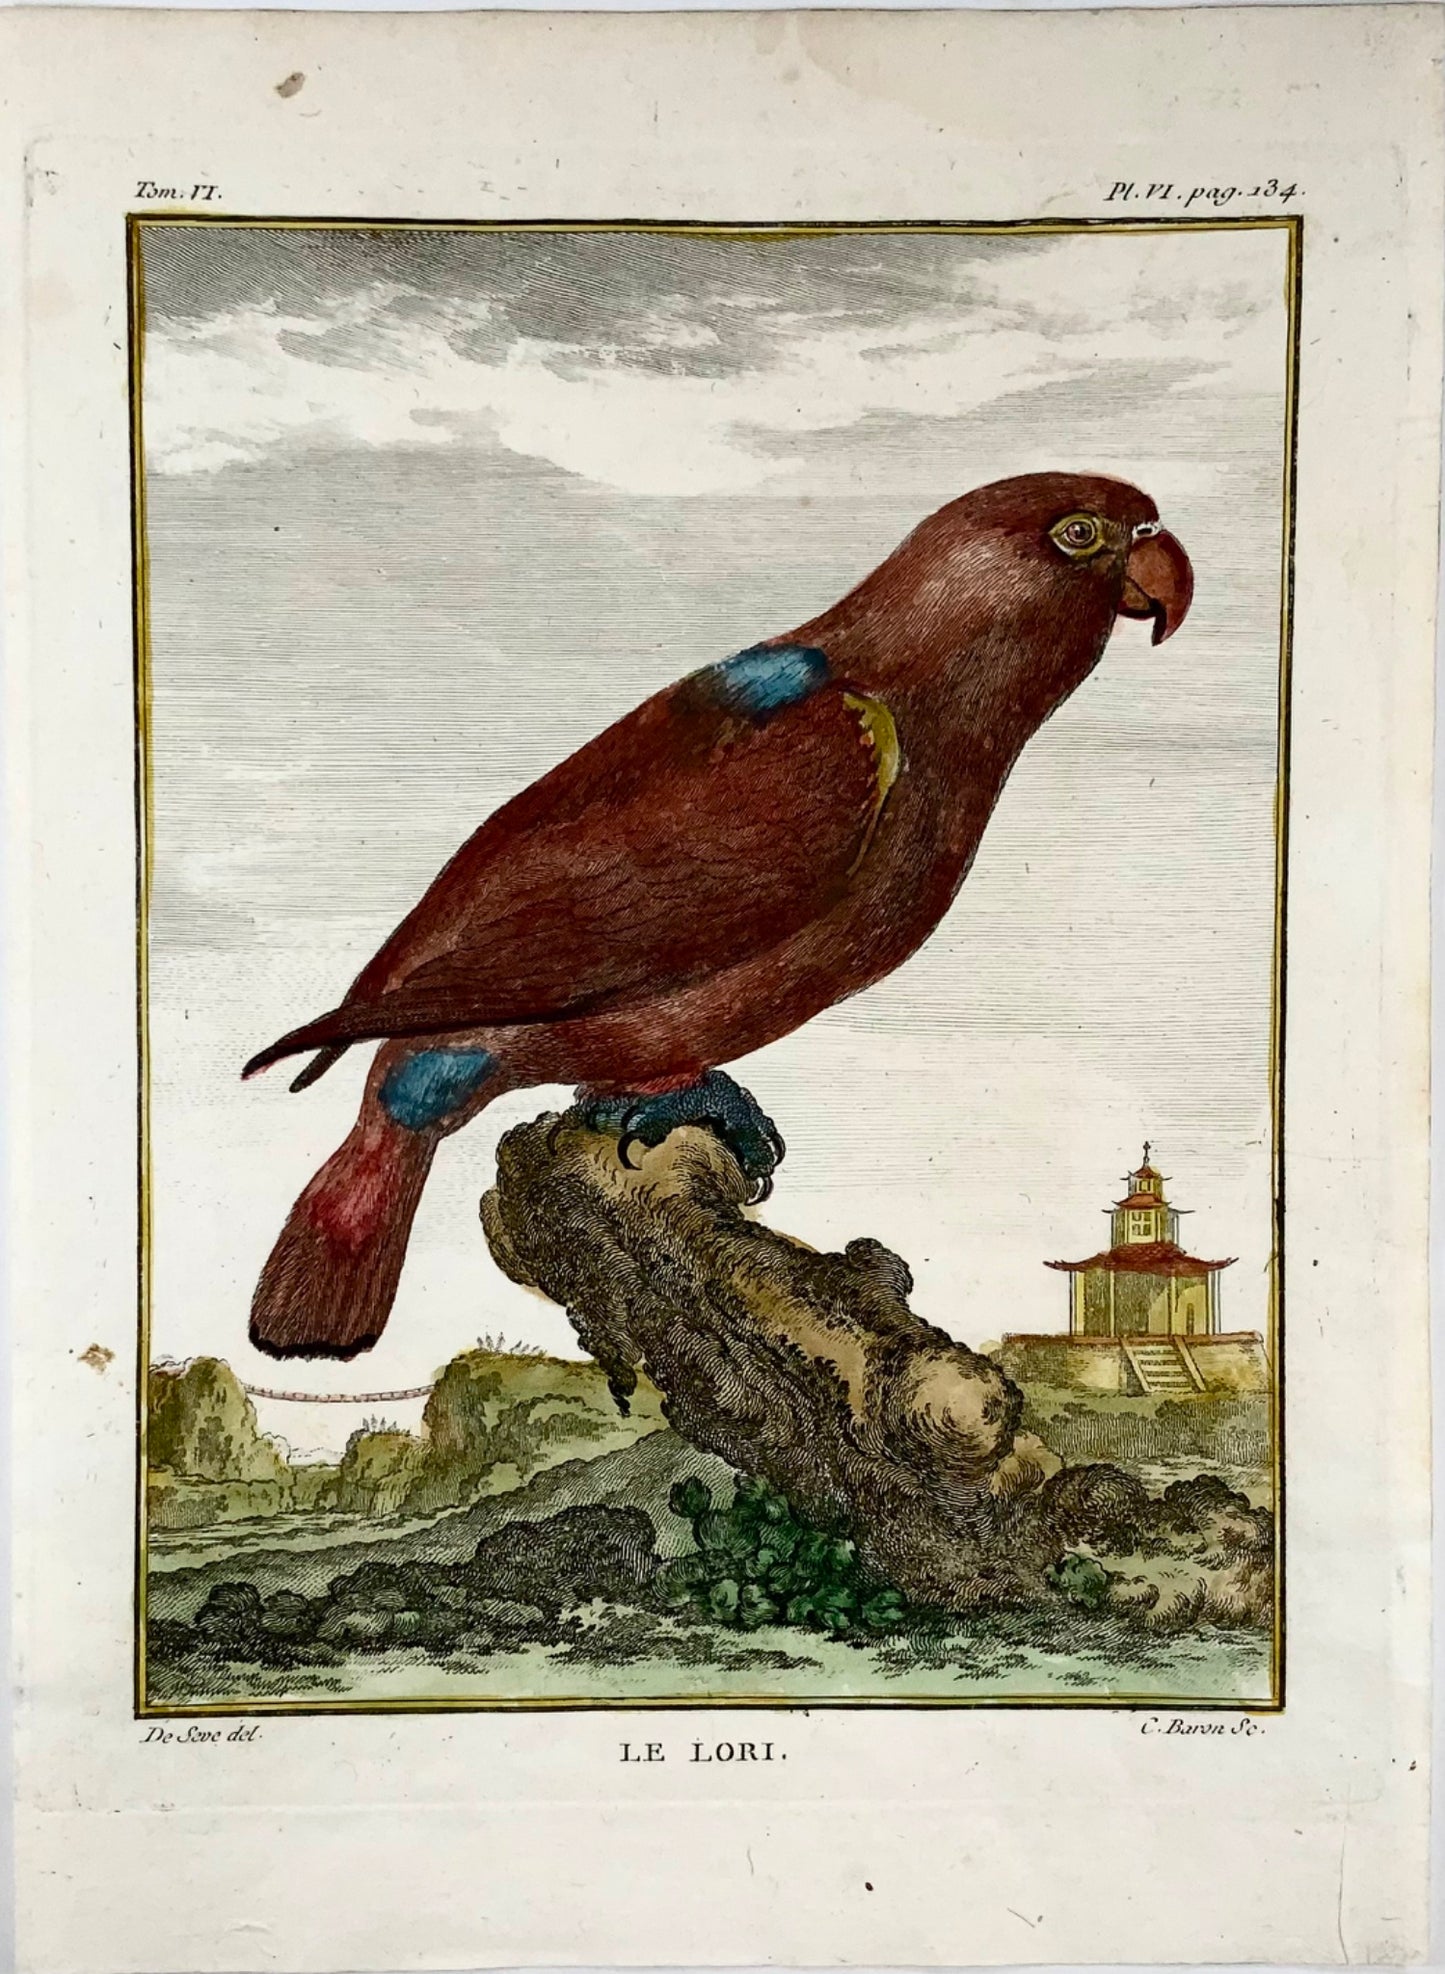 1771 Lori, De Seve, ornithologie, édition grand quart, gravure 